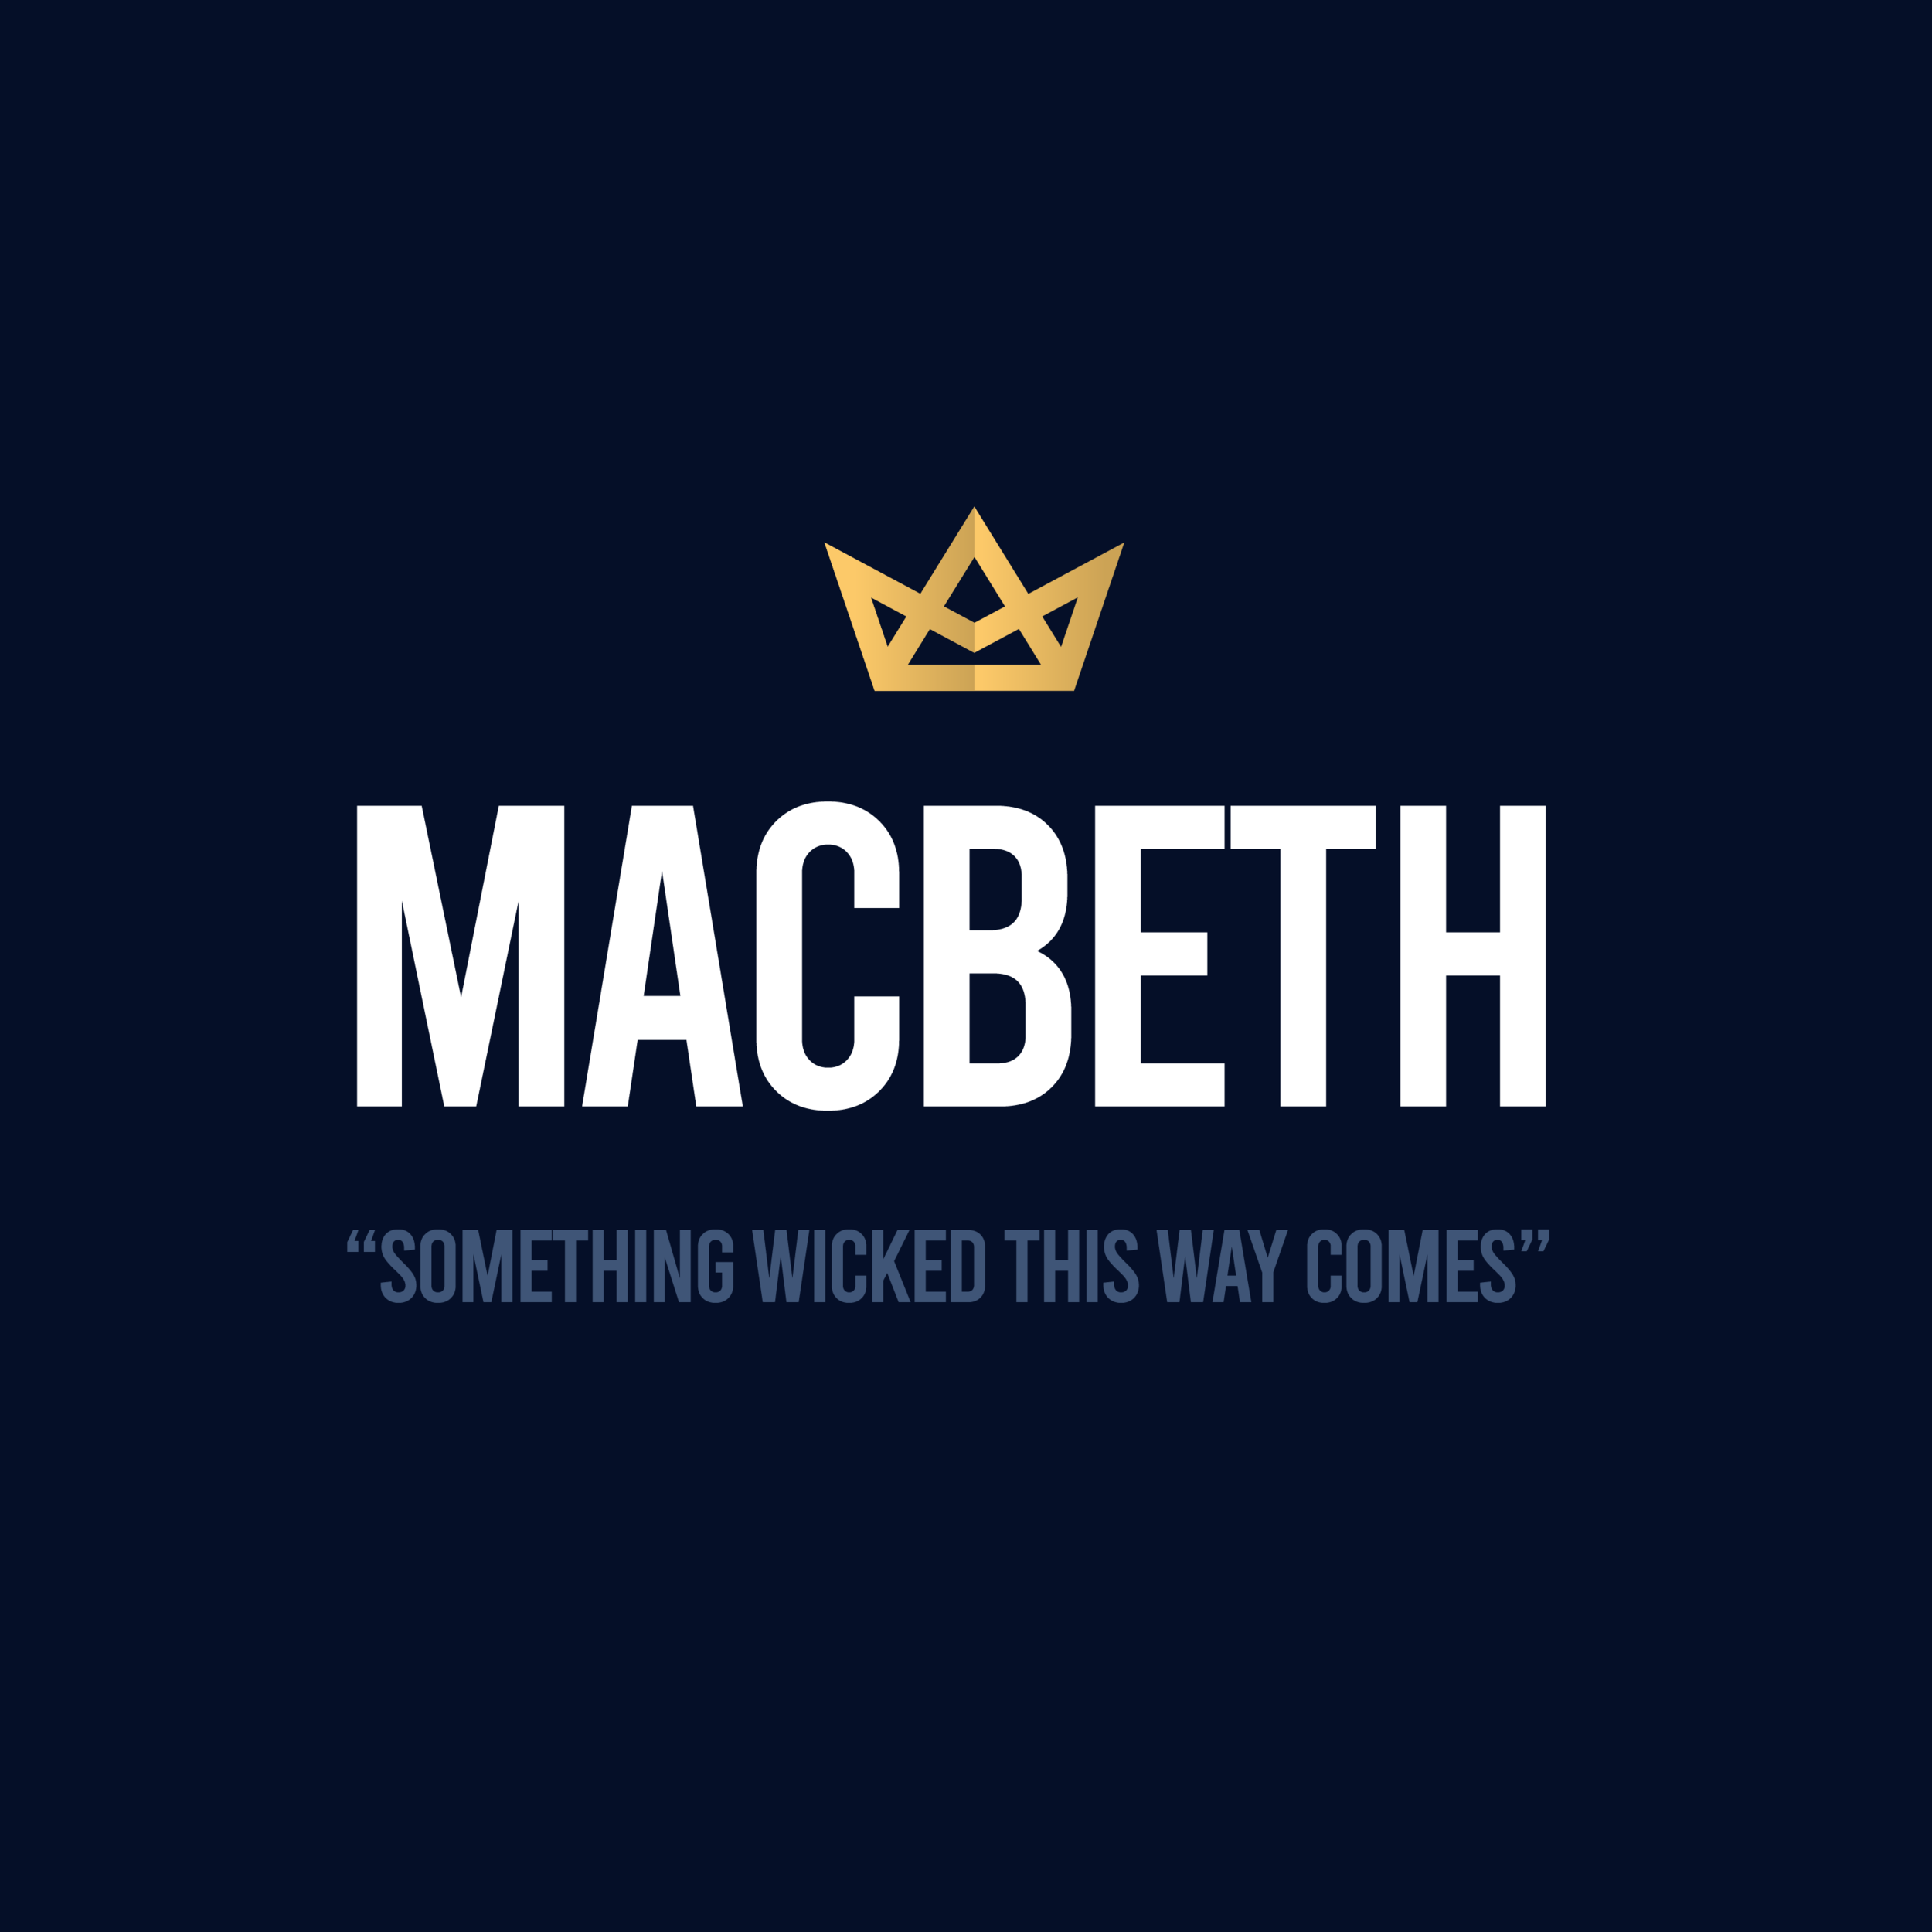 Macbeth_LOGO.png